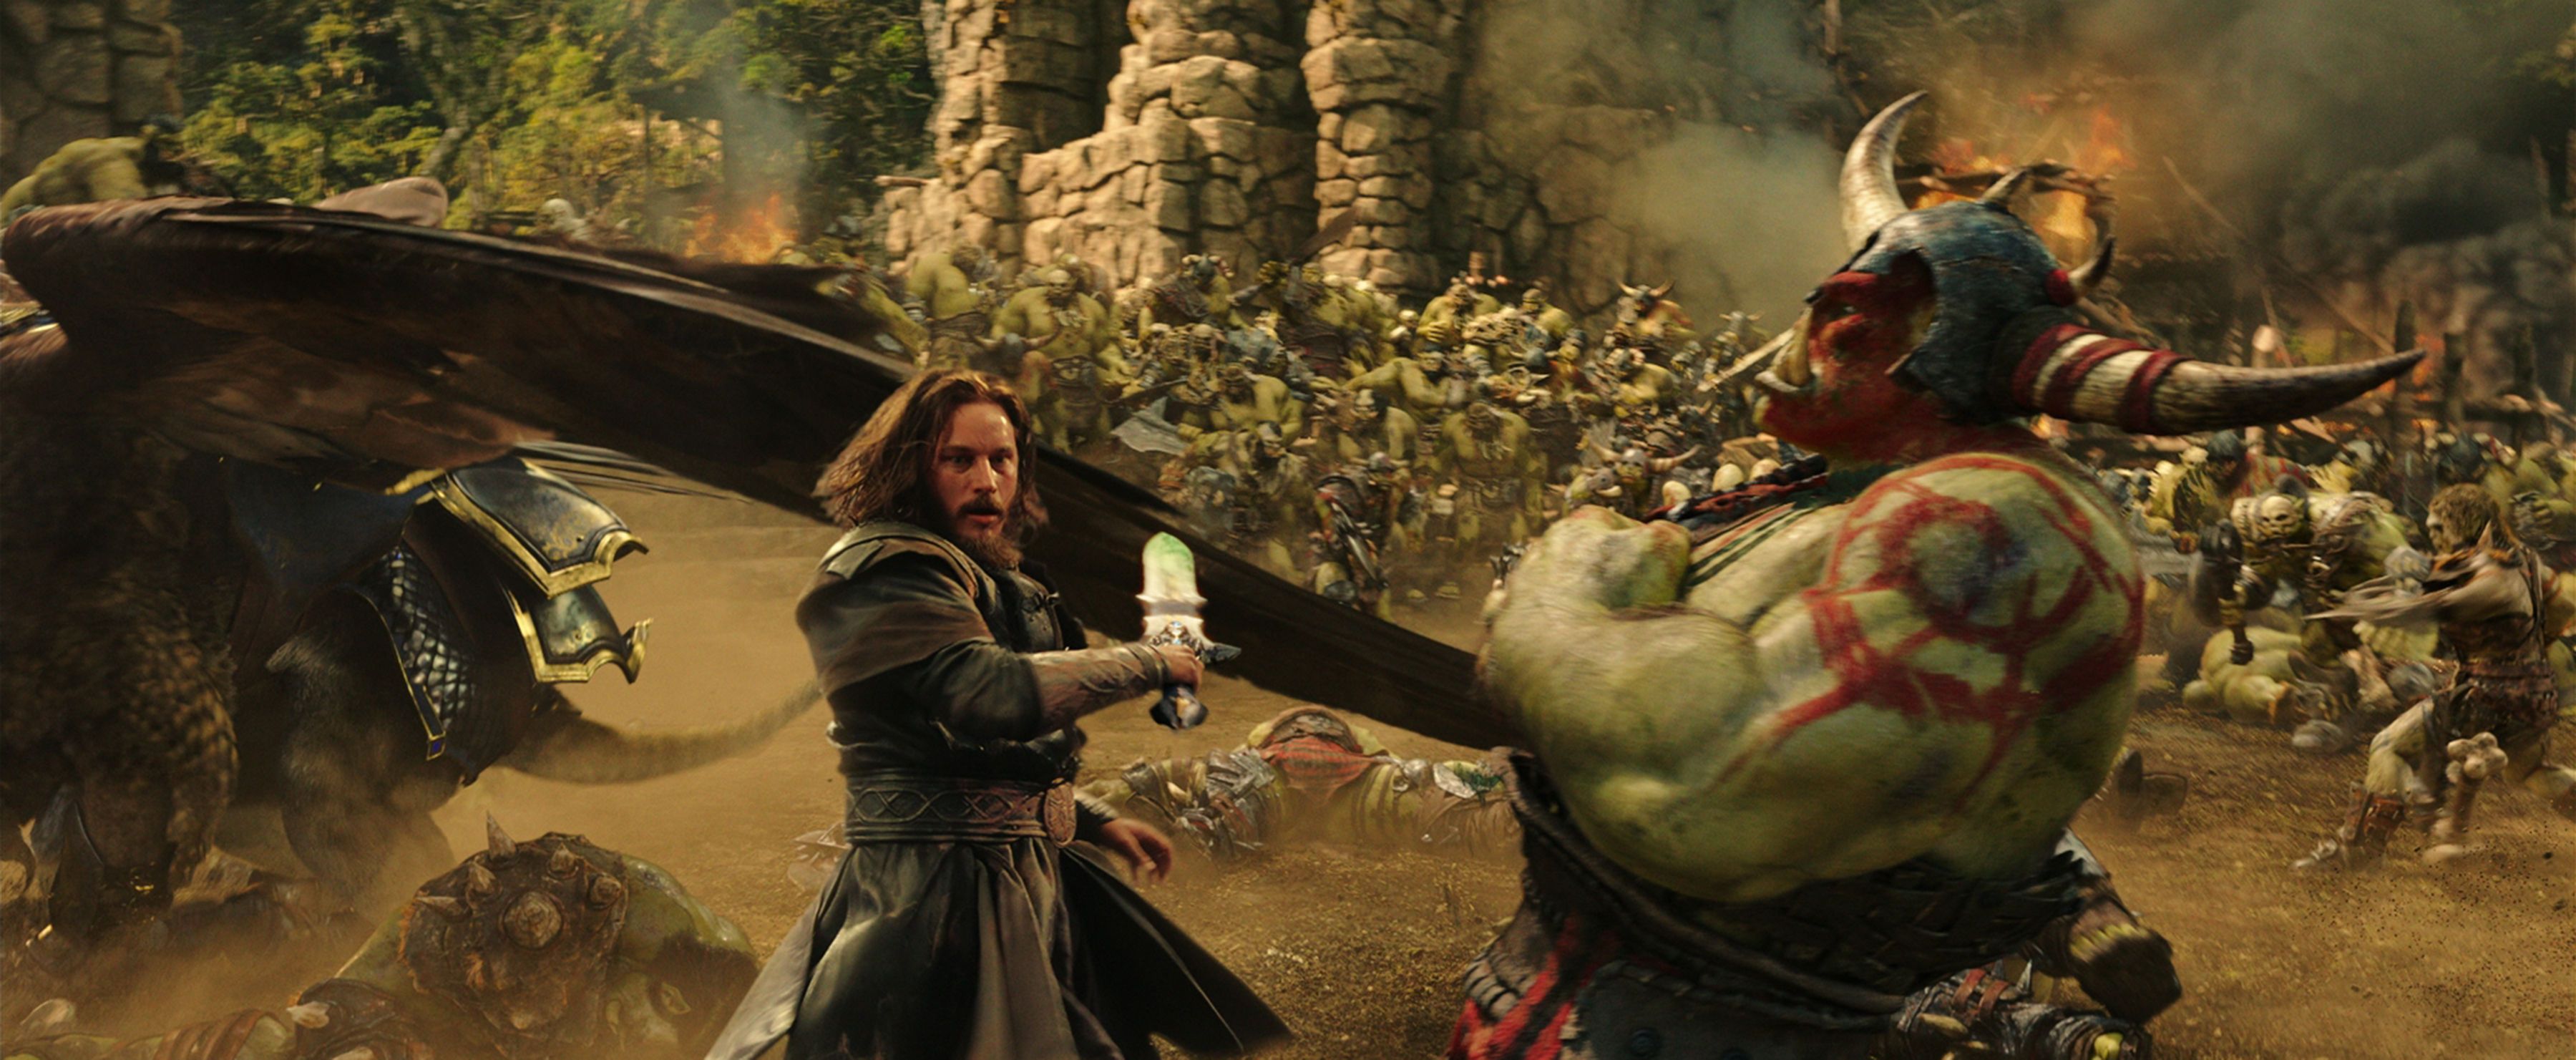 Warcraft - Anduin Lothar (Travis Fimmel) vs. Orc